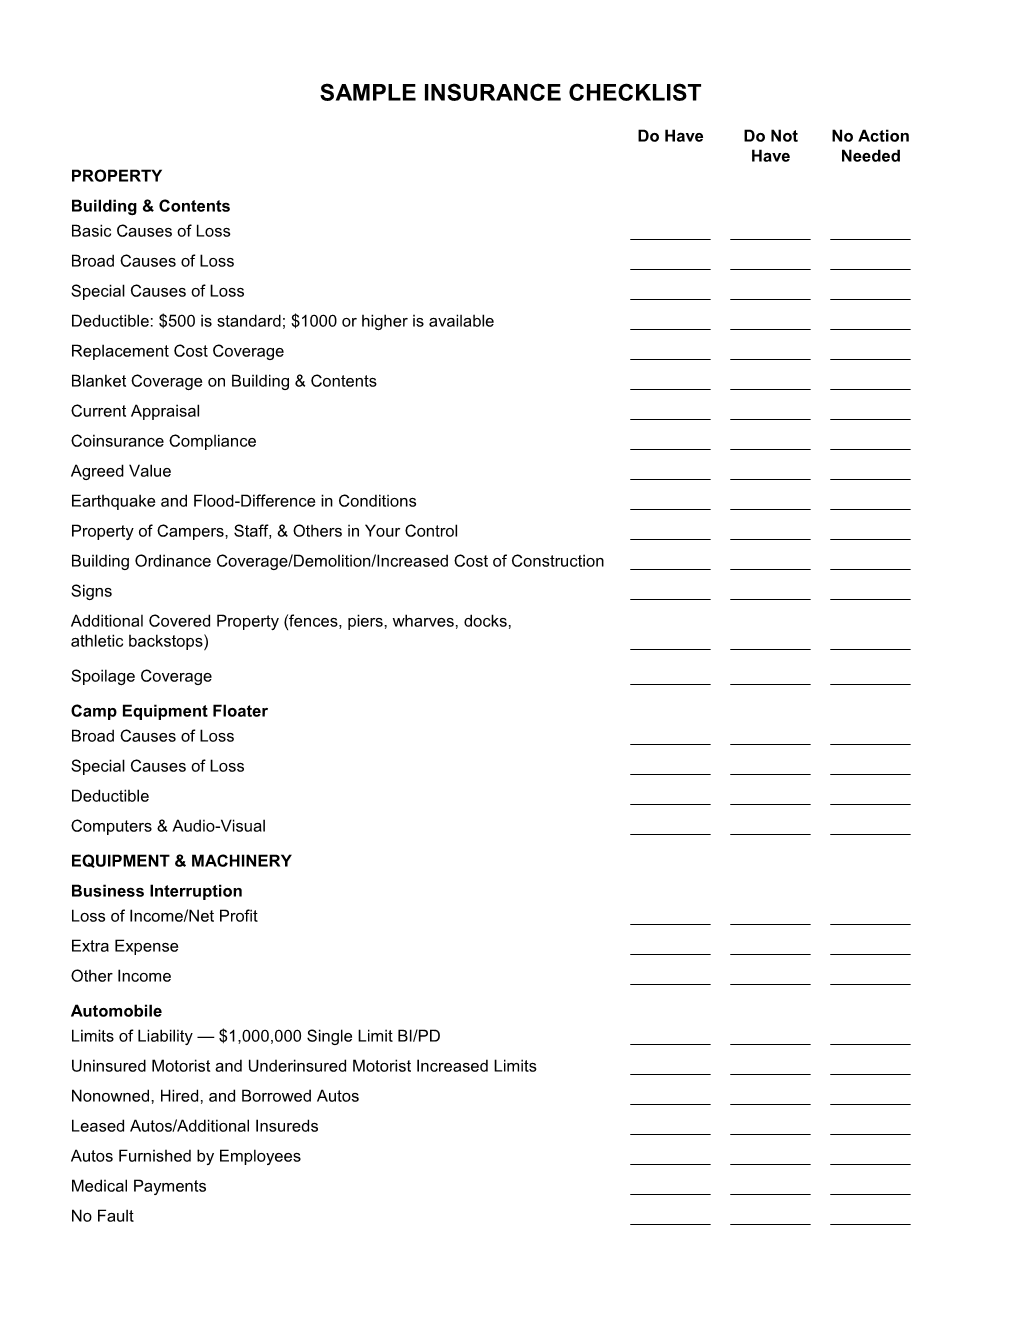 Sample Insurance Checklist